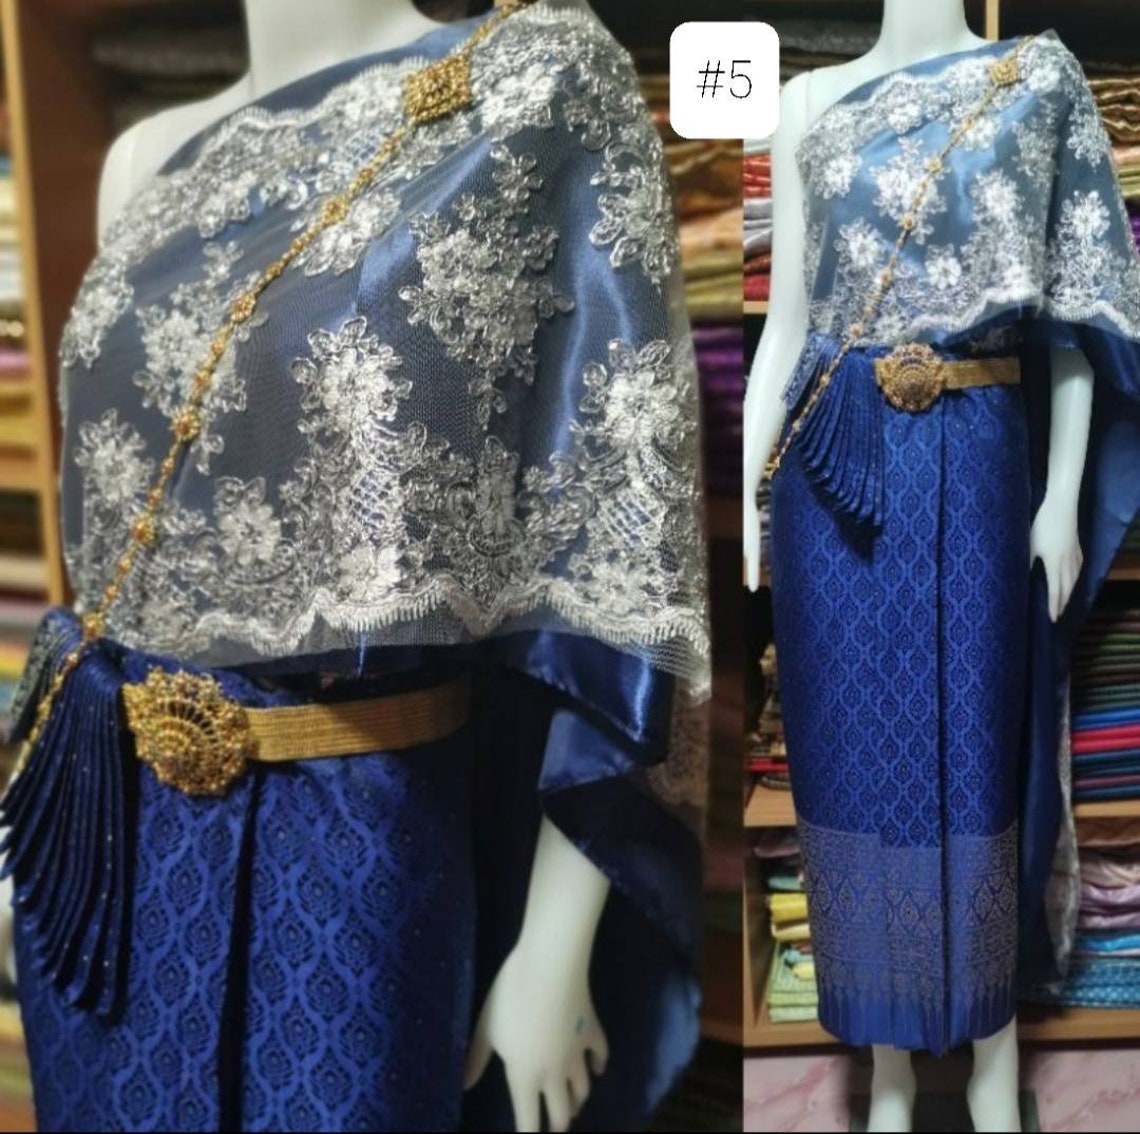 Classical Thai/Khmer wedding dress Lace sash silk skirt | Etsy